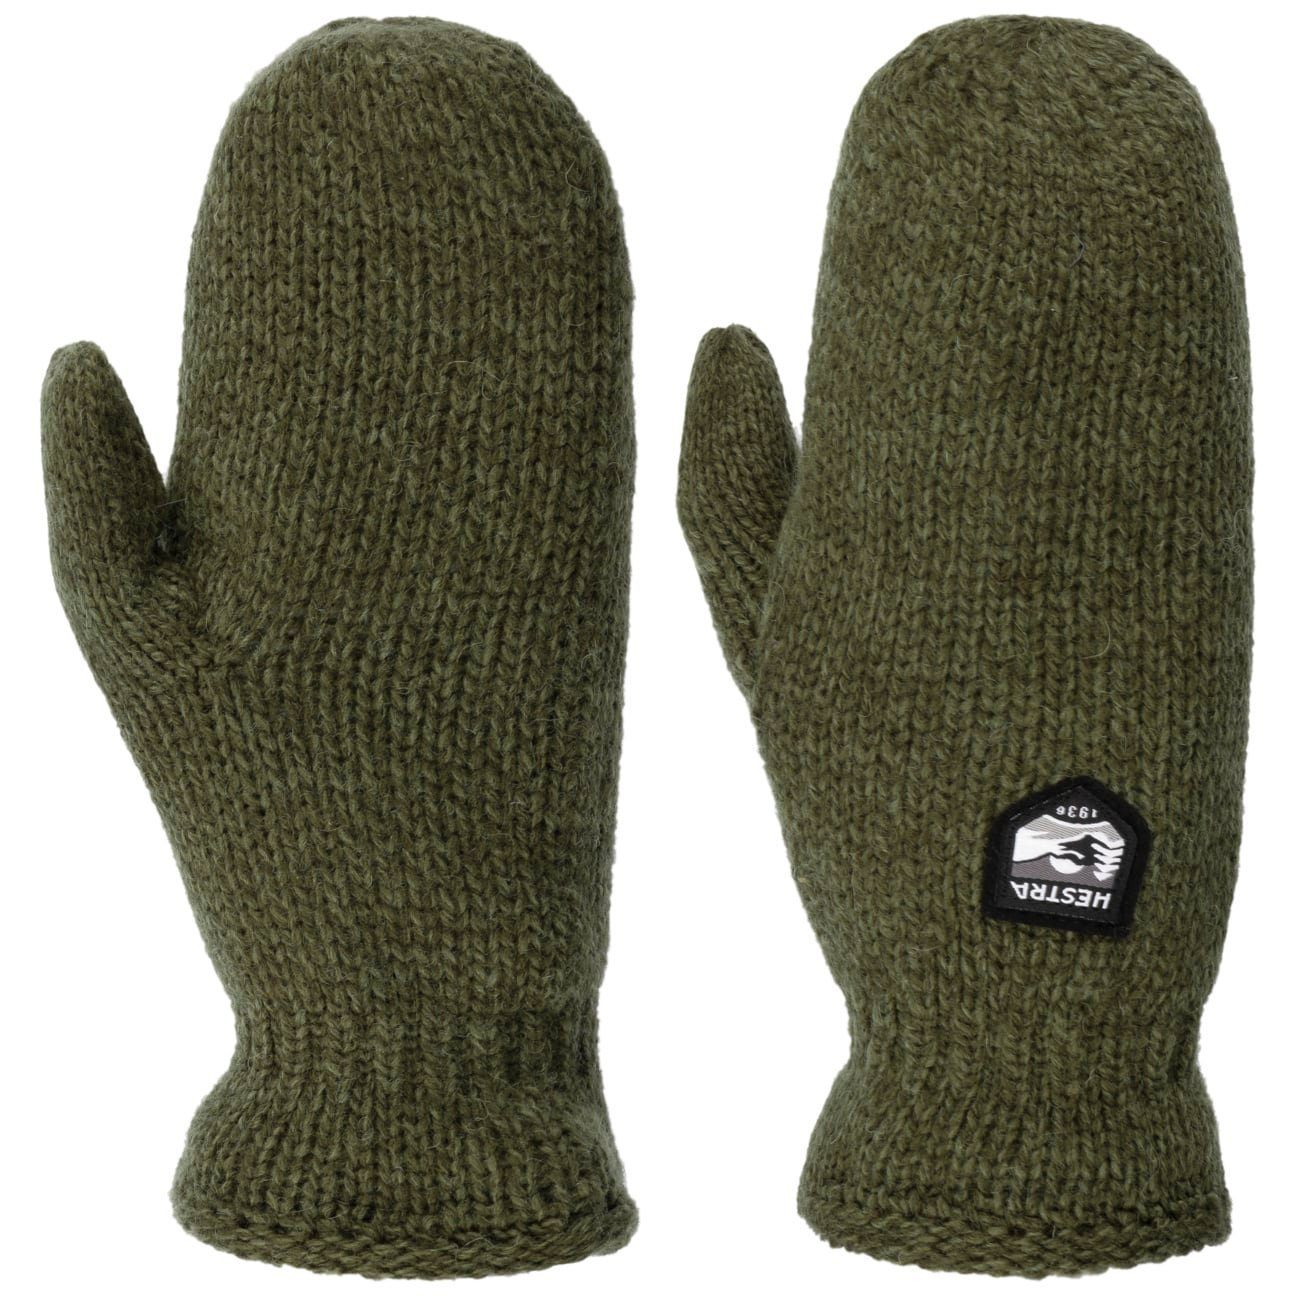 Hestra Strickhandschuhe Handschuhe mit Futter oliv | Strickhandschuhe